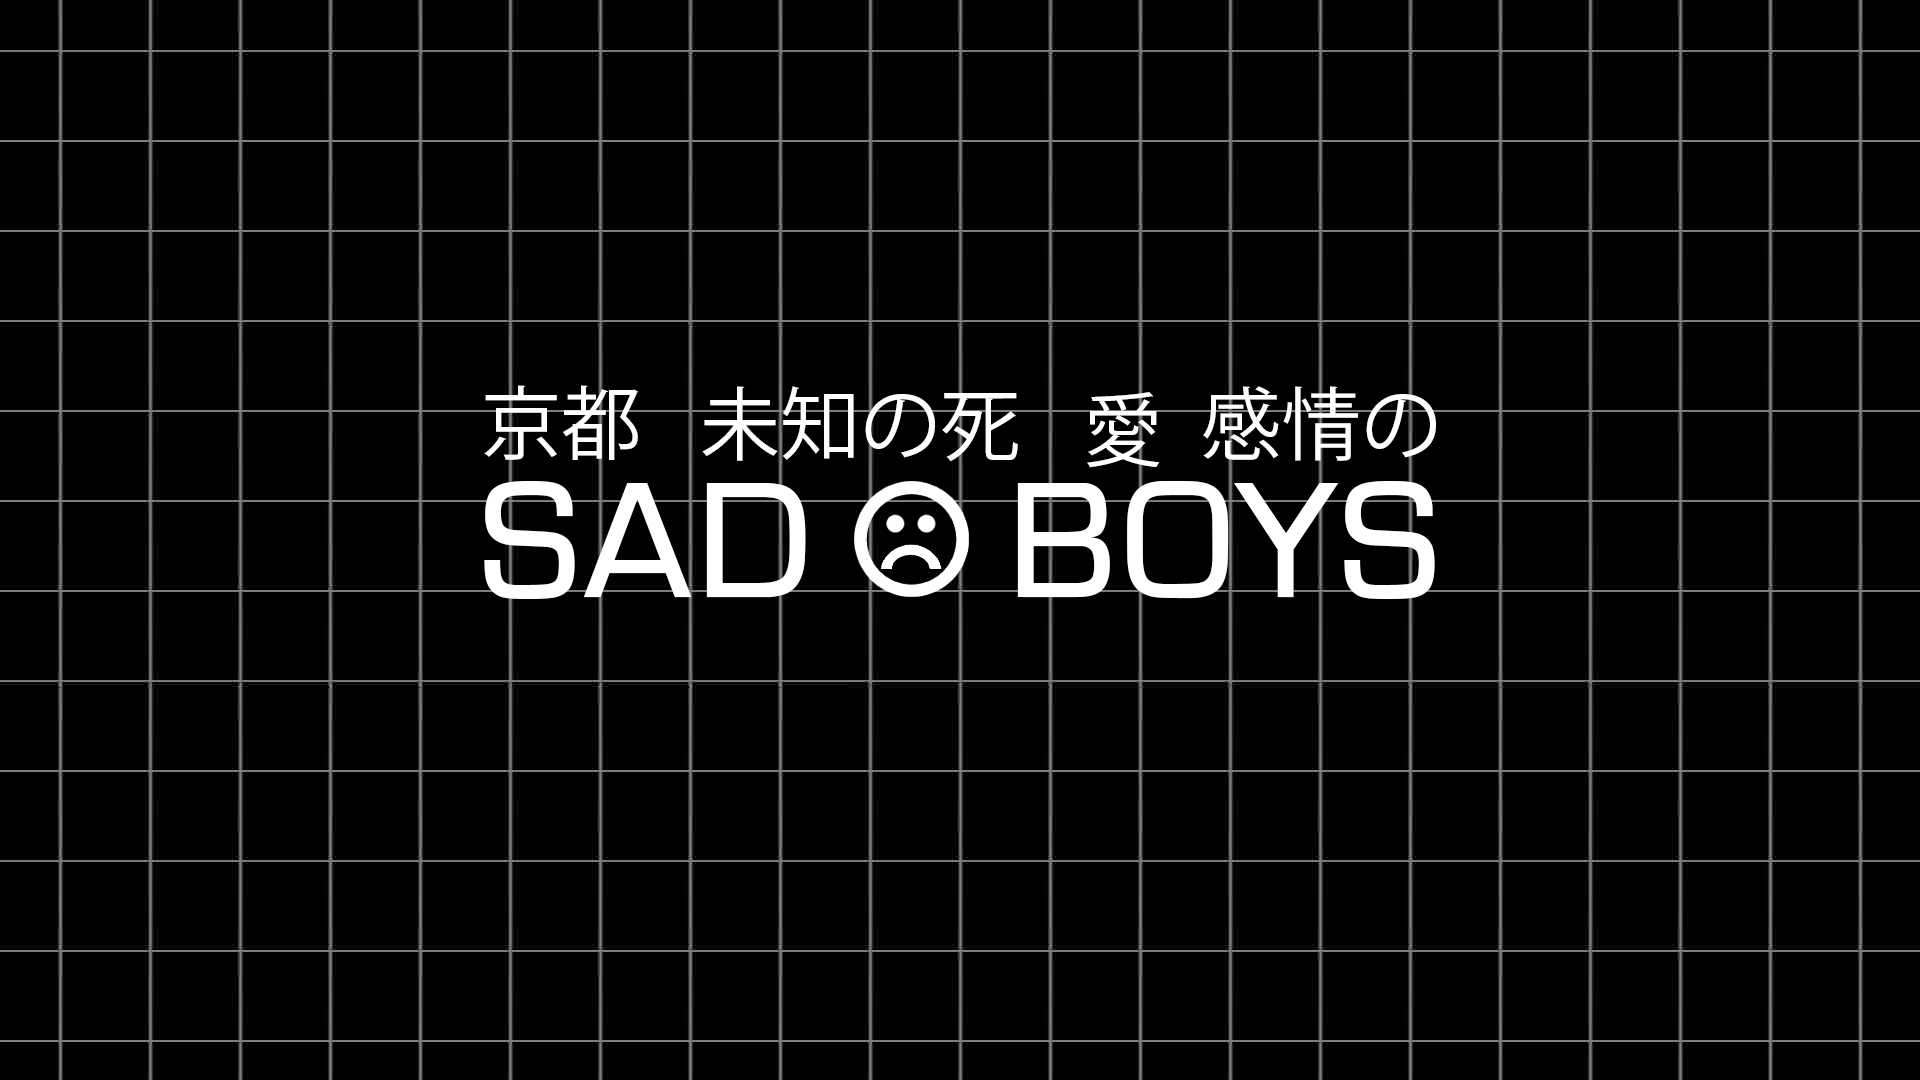 Free Download Sad Boy Wallpaper. Wallpaper, Background, Image